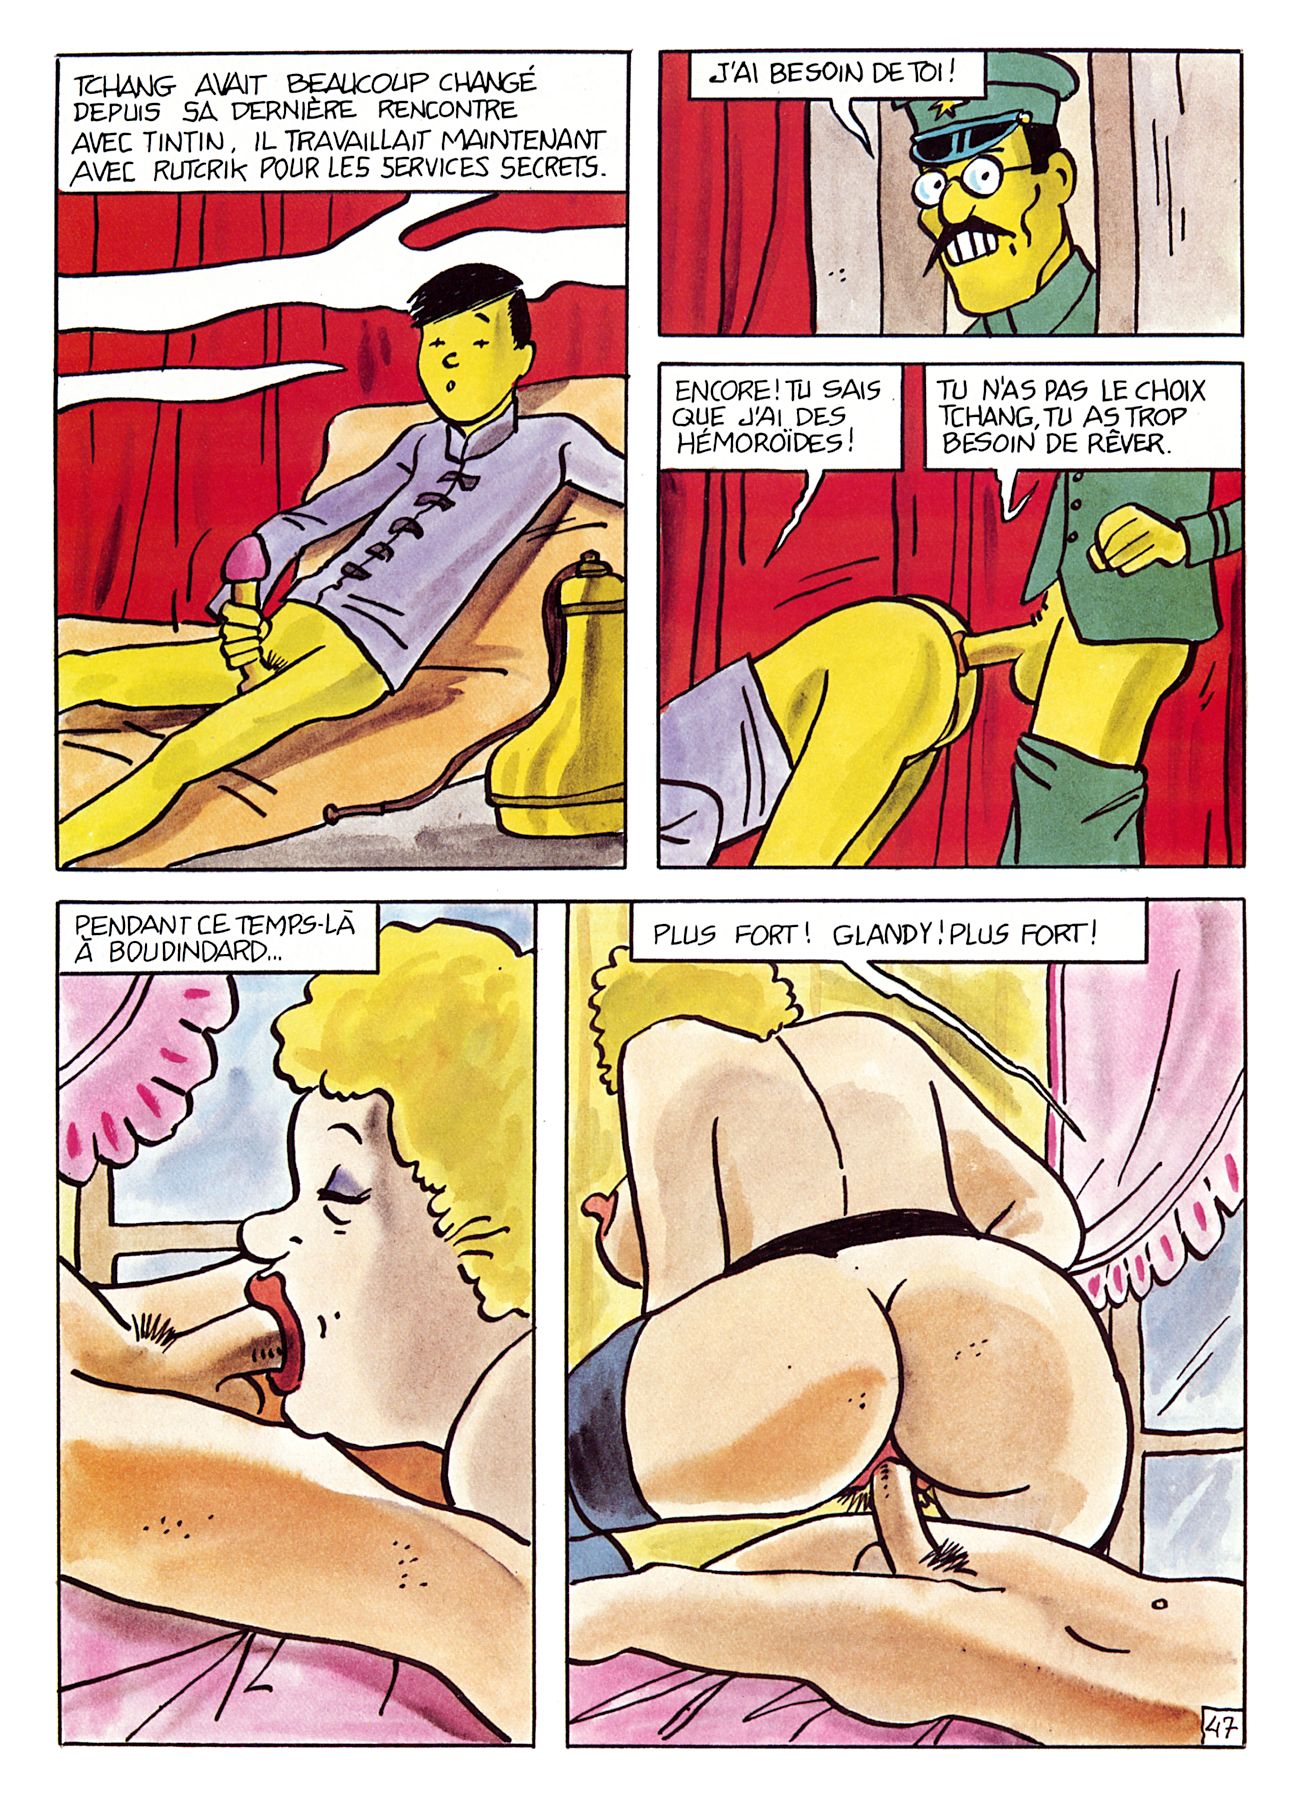 La-Vie-Sexuelle-De-Tintin-1992-All-64-pages-French-page47--Gotofap.tk--44333316.jpg